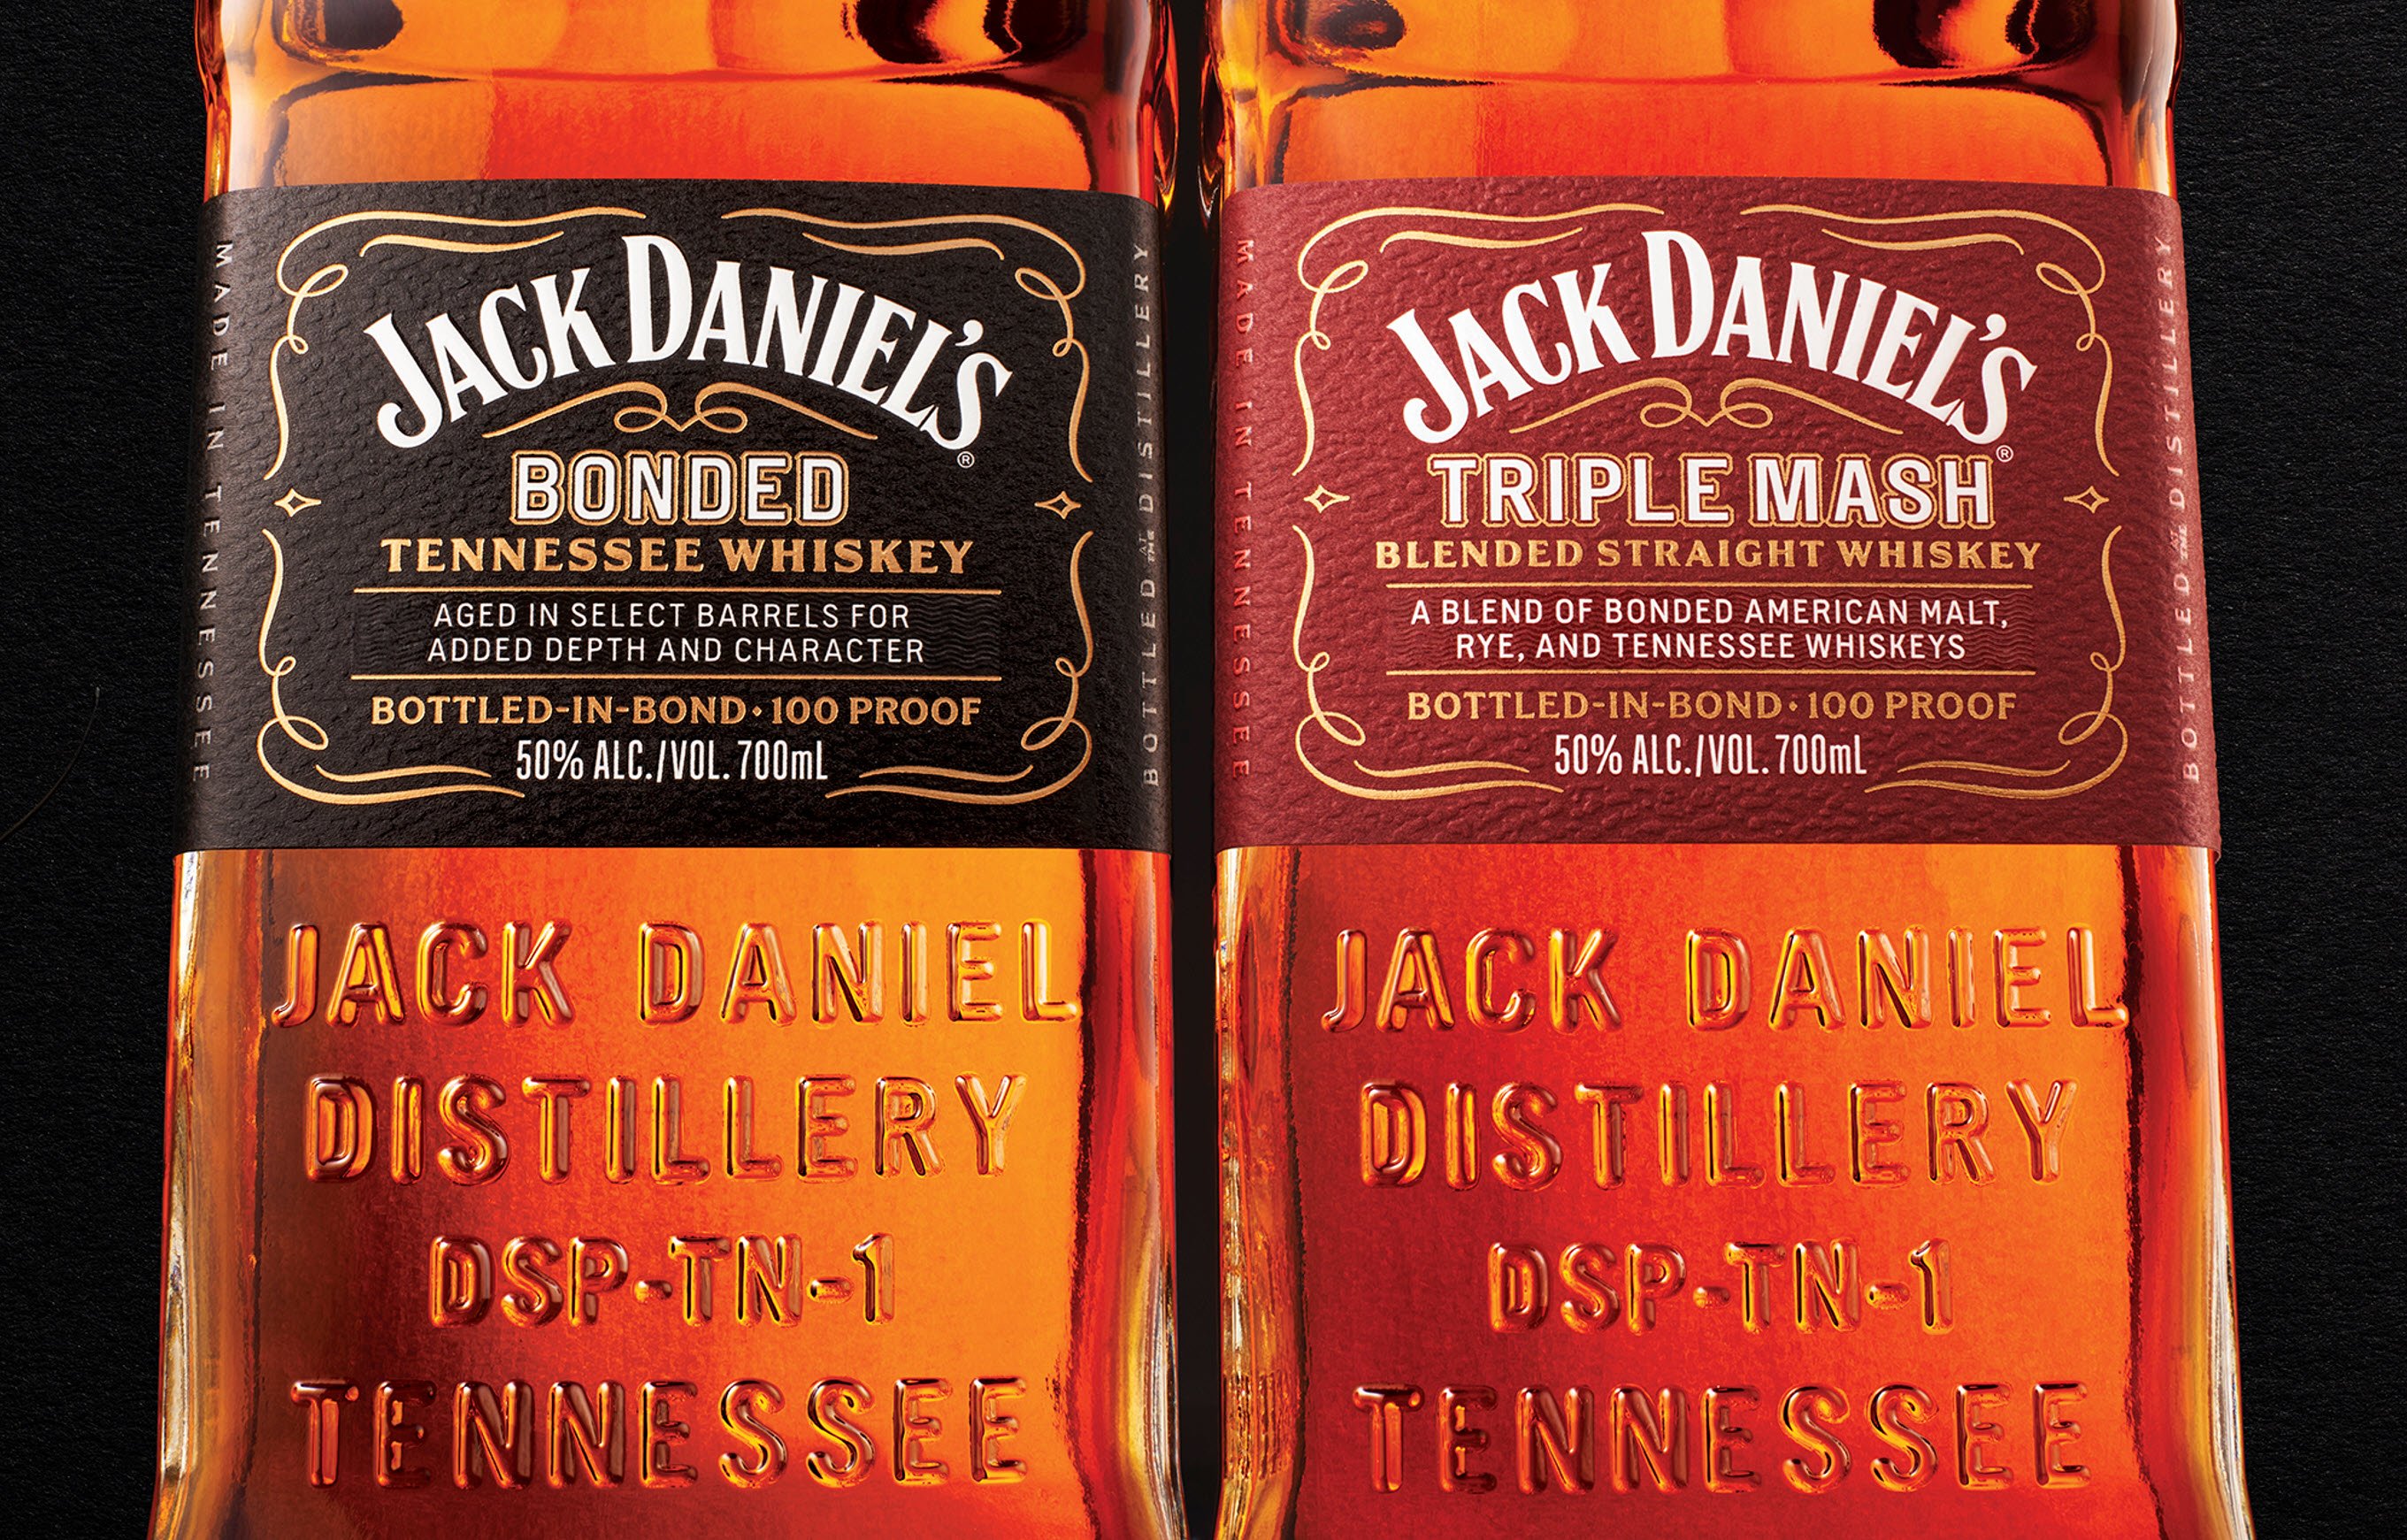 The Jack Daniel Distillery - Line Extension